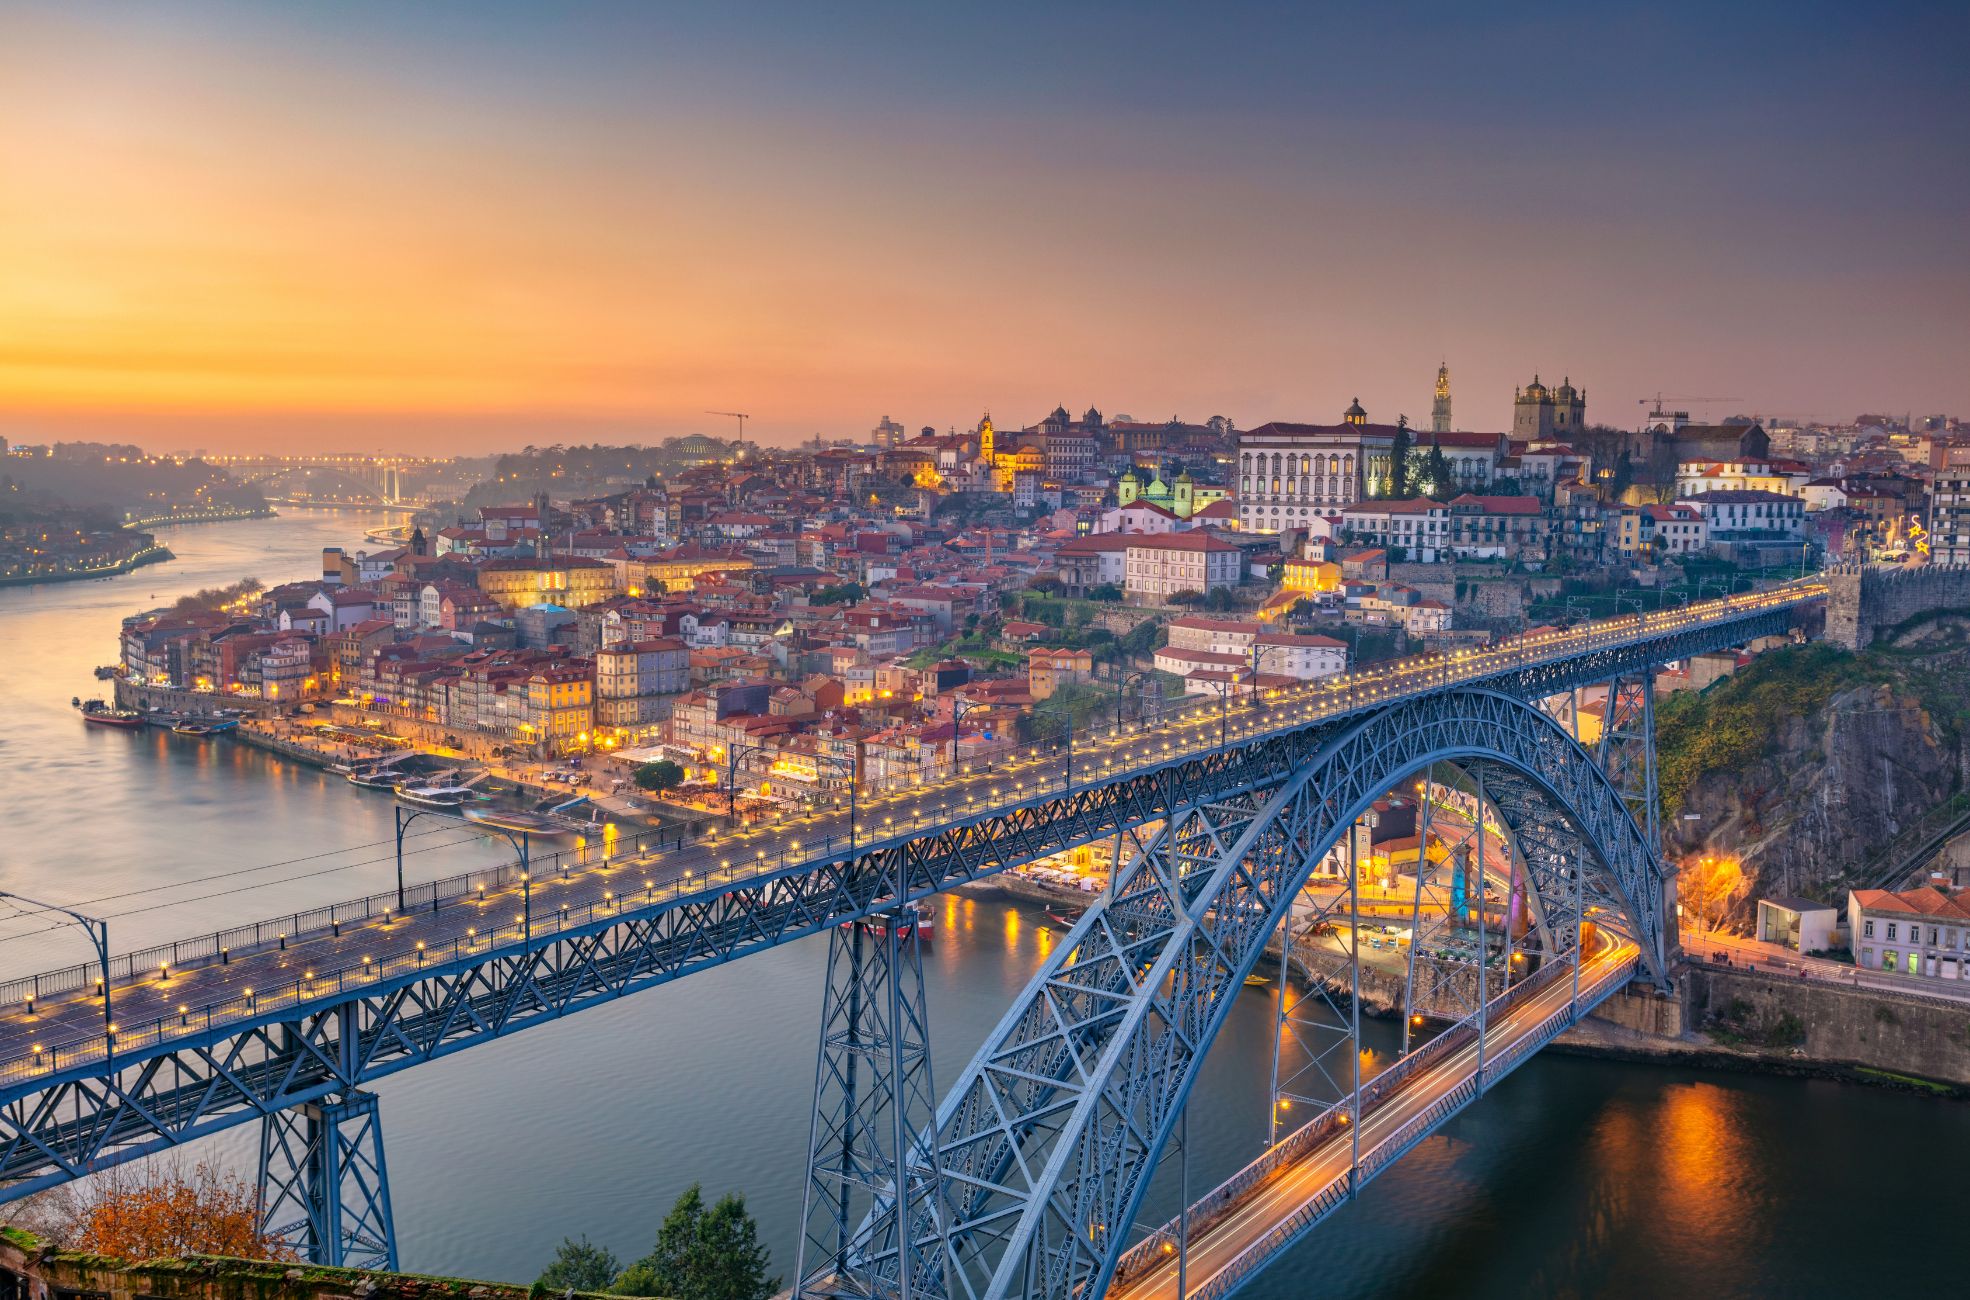 City, River And Bridge In Portugal